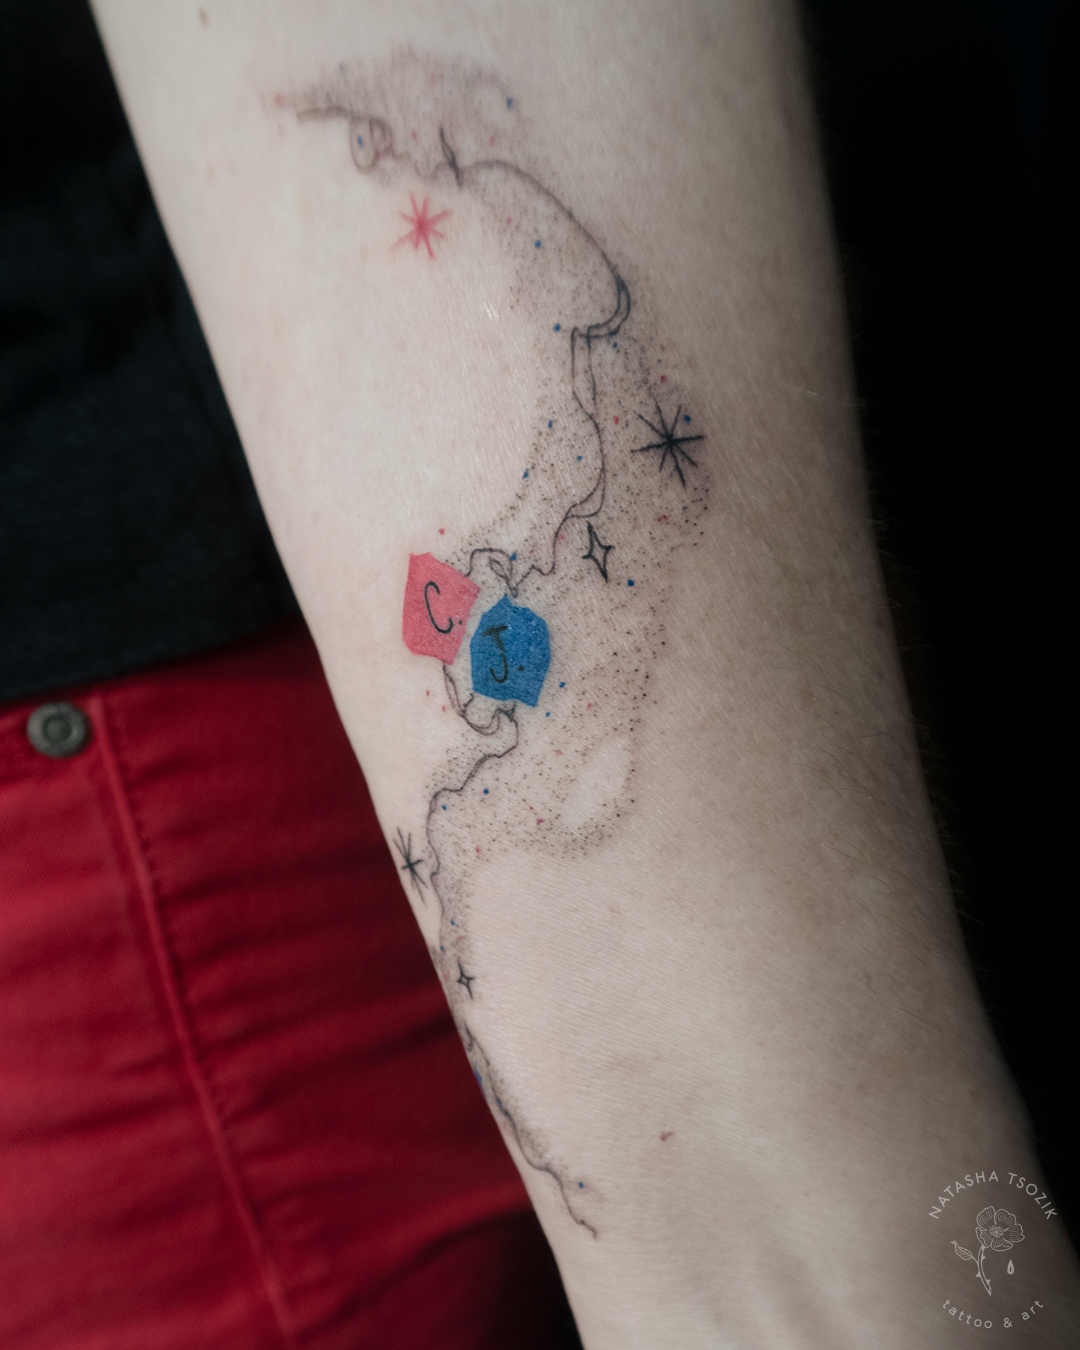 Star dust & initials tattoo on a forearm.